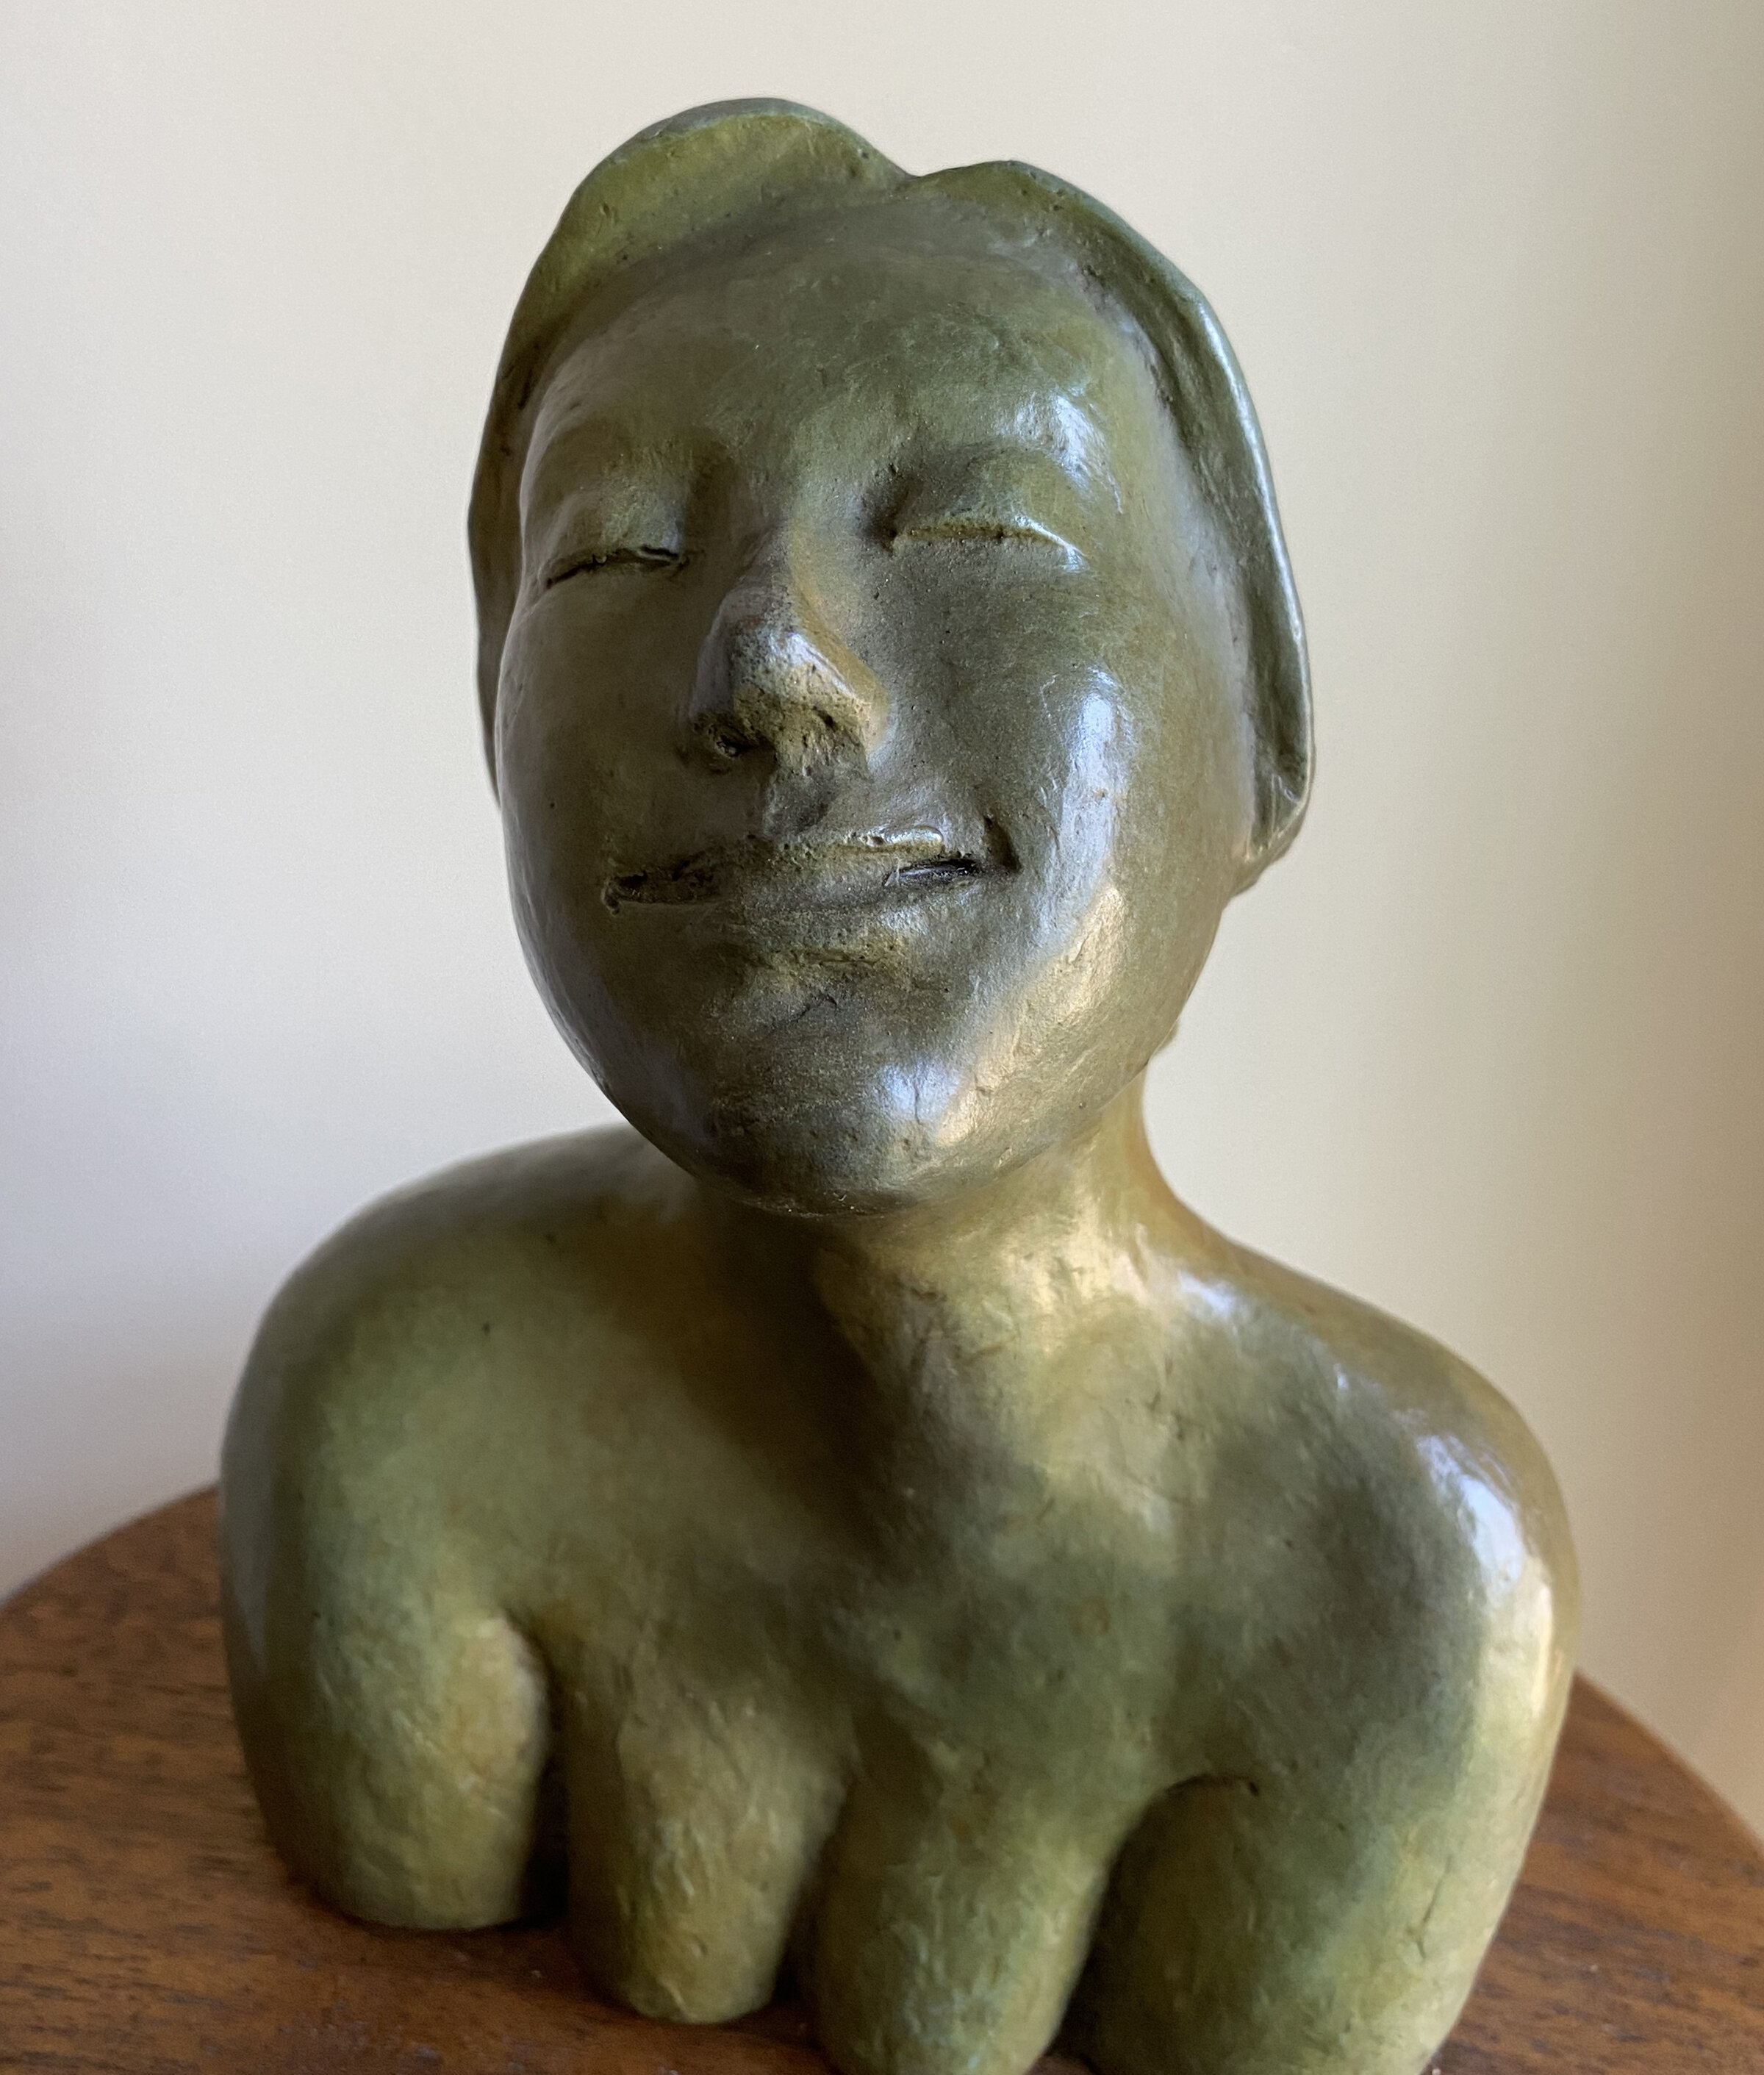 &lt;p&gt;&lt;strong&gt;CAROLYN WIRTH&lt;/strong&gt;bronze sculpture&lt;a href="/carolyn-wirth-looking-up-2021"&gt;More →&lt;/a&gt;&lt;/p&gt; 